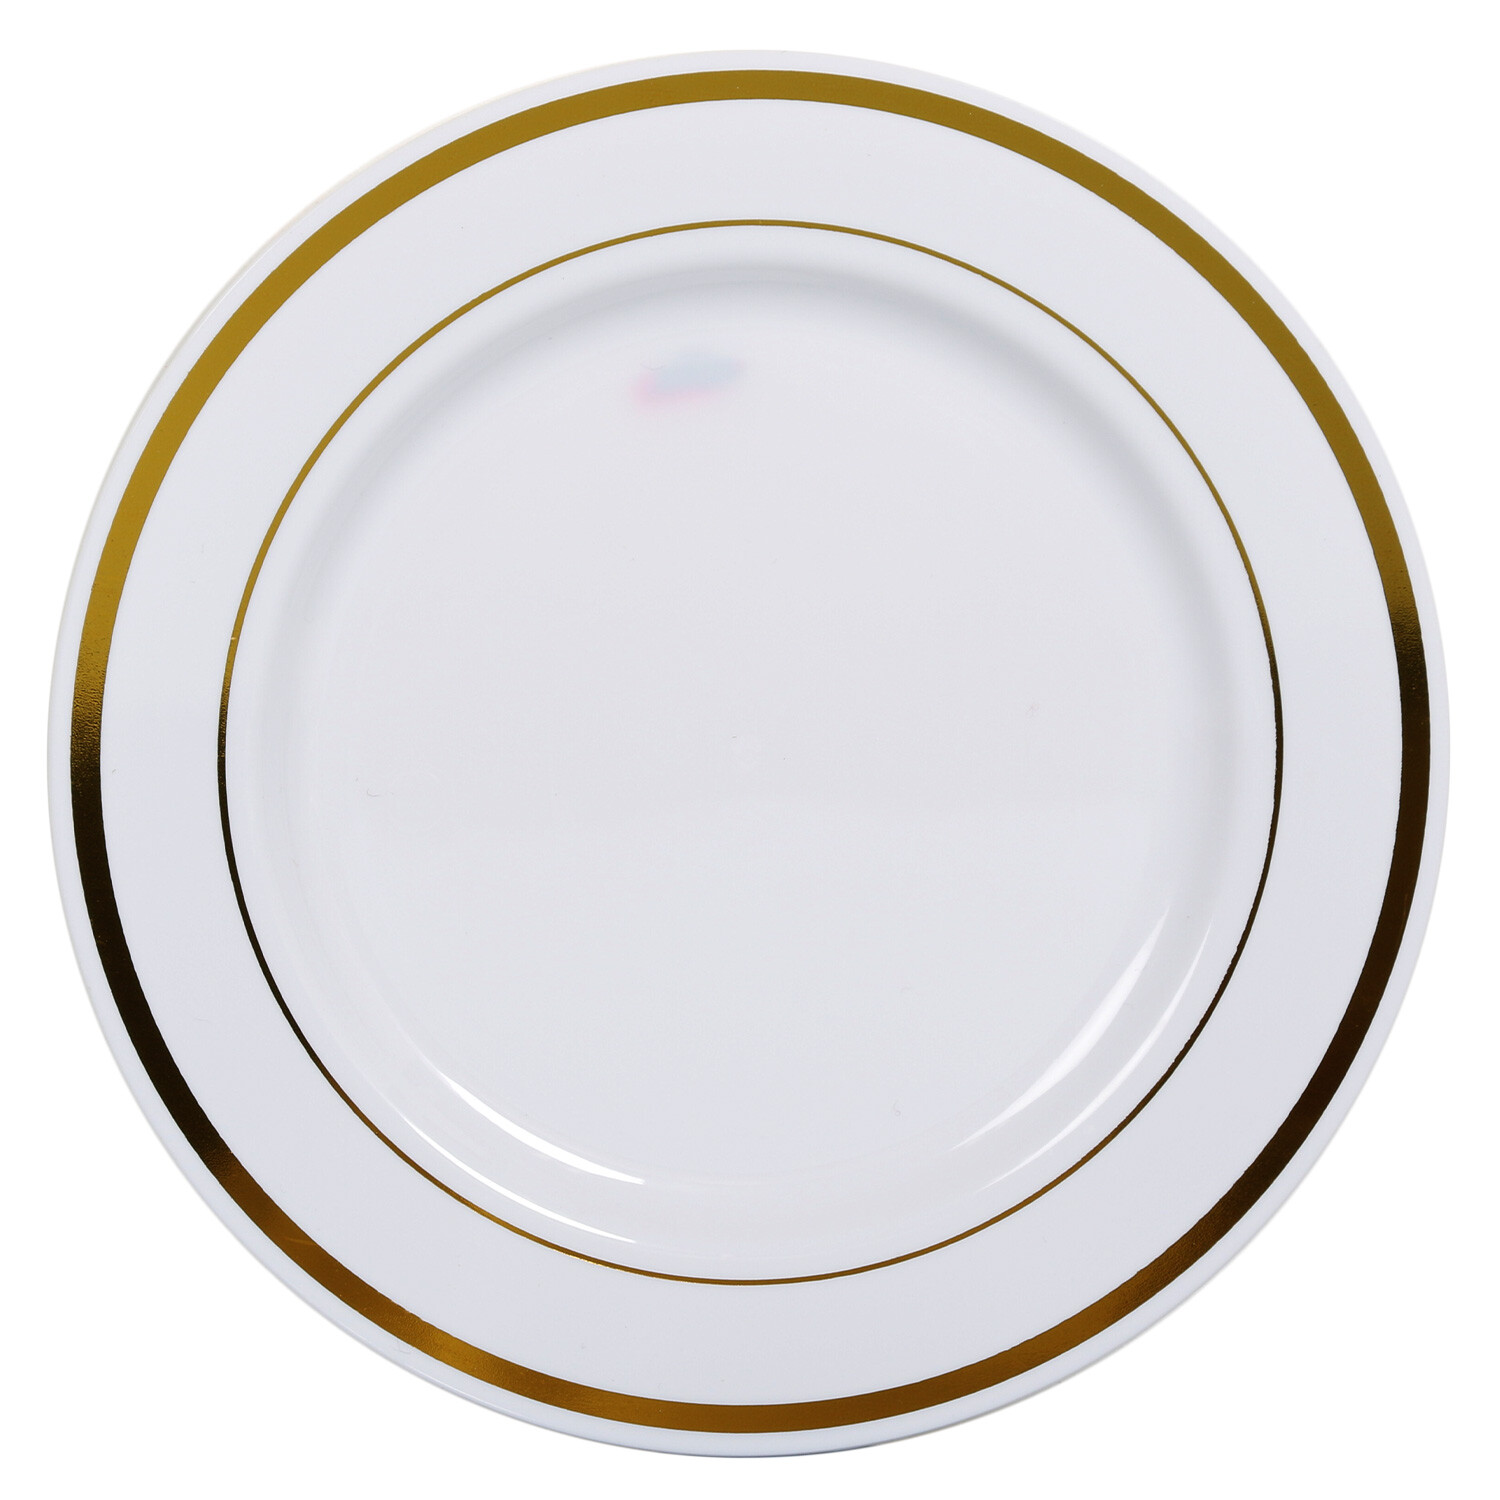 Pack of 8 Gold Rim Plastic Plates - Gold / 1.1cm Image 2